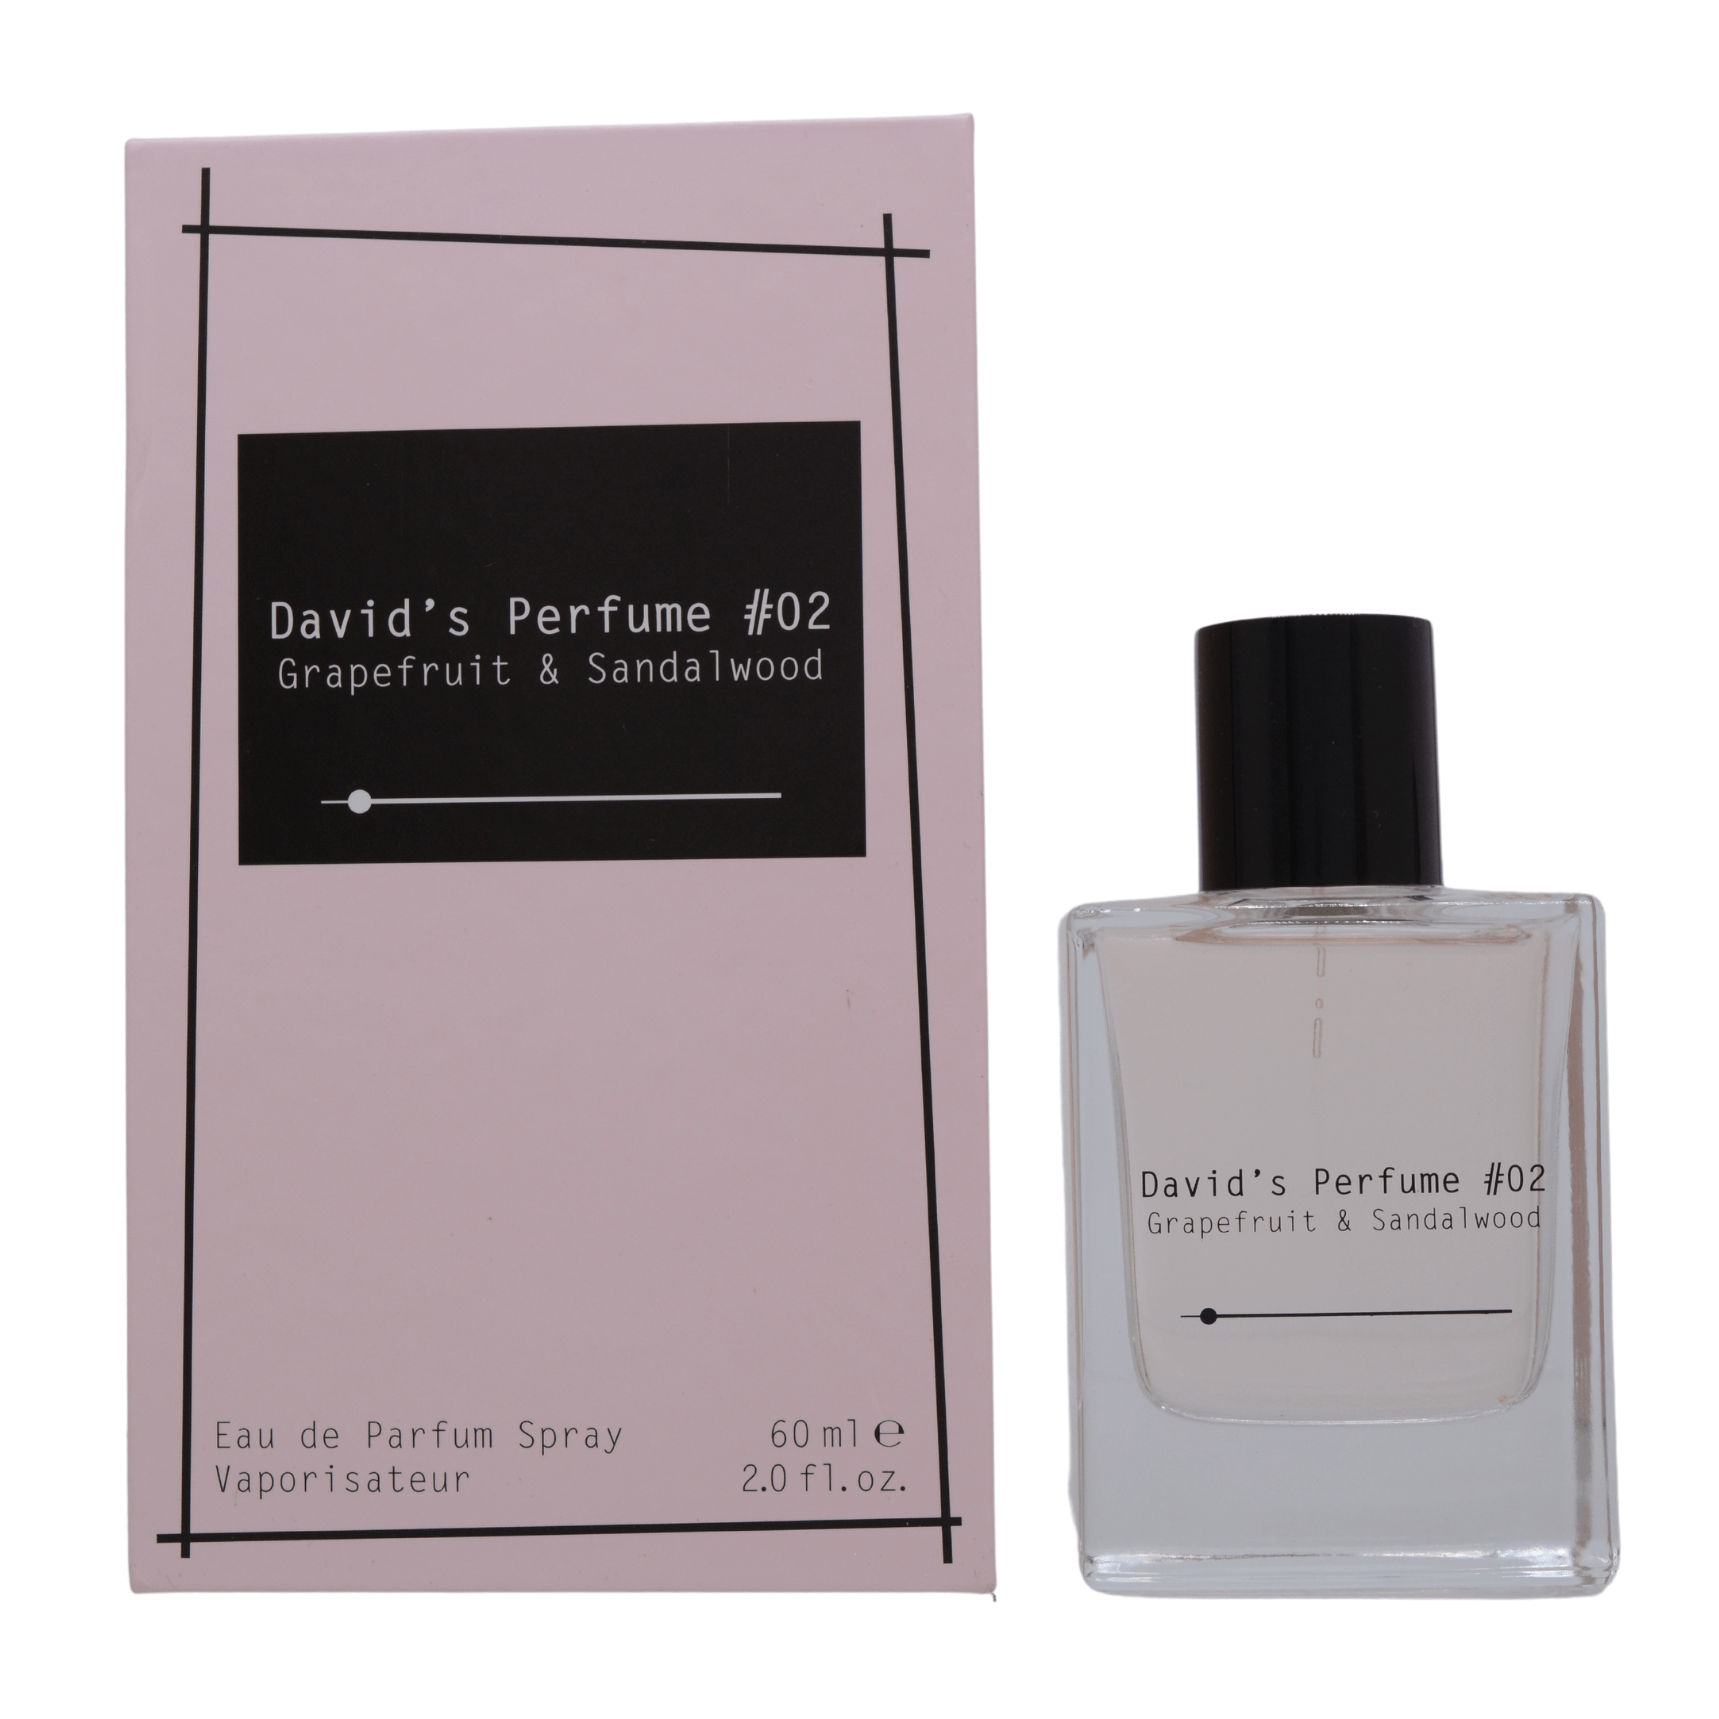 David Dobrik's Perfume #02 Grapefruit & Sandalwood fragrance bottle and packaging box.